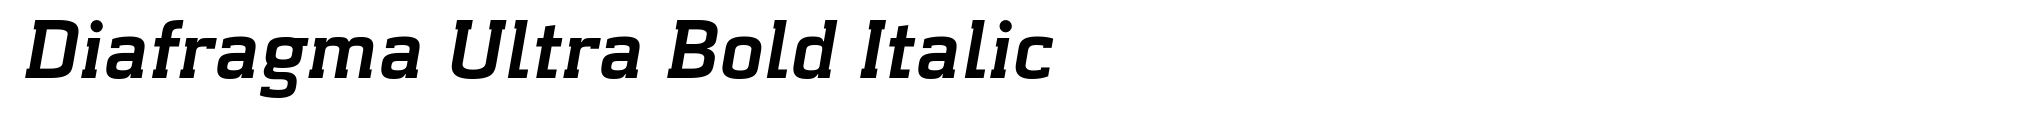 Diafragma Ultra Bold Italic image